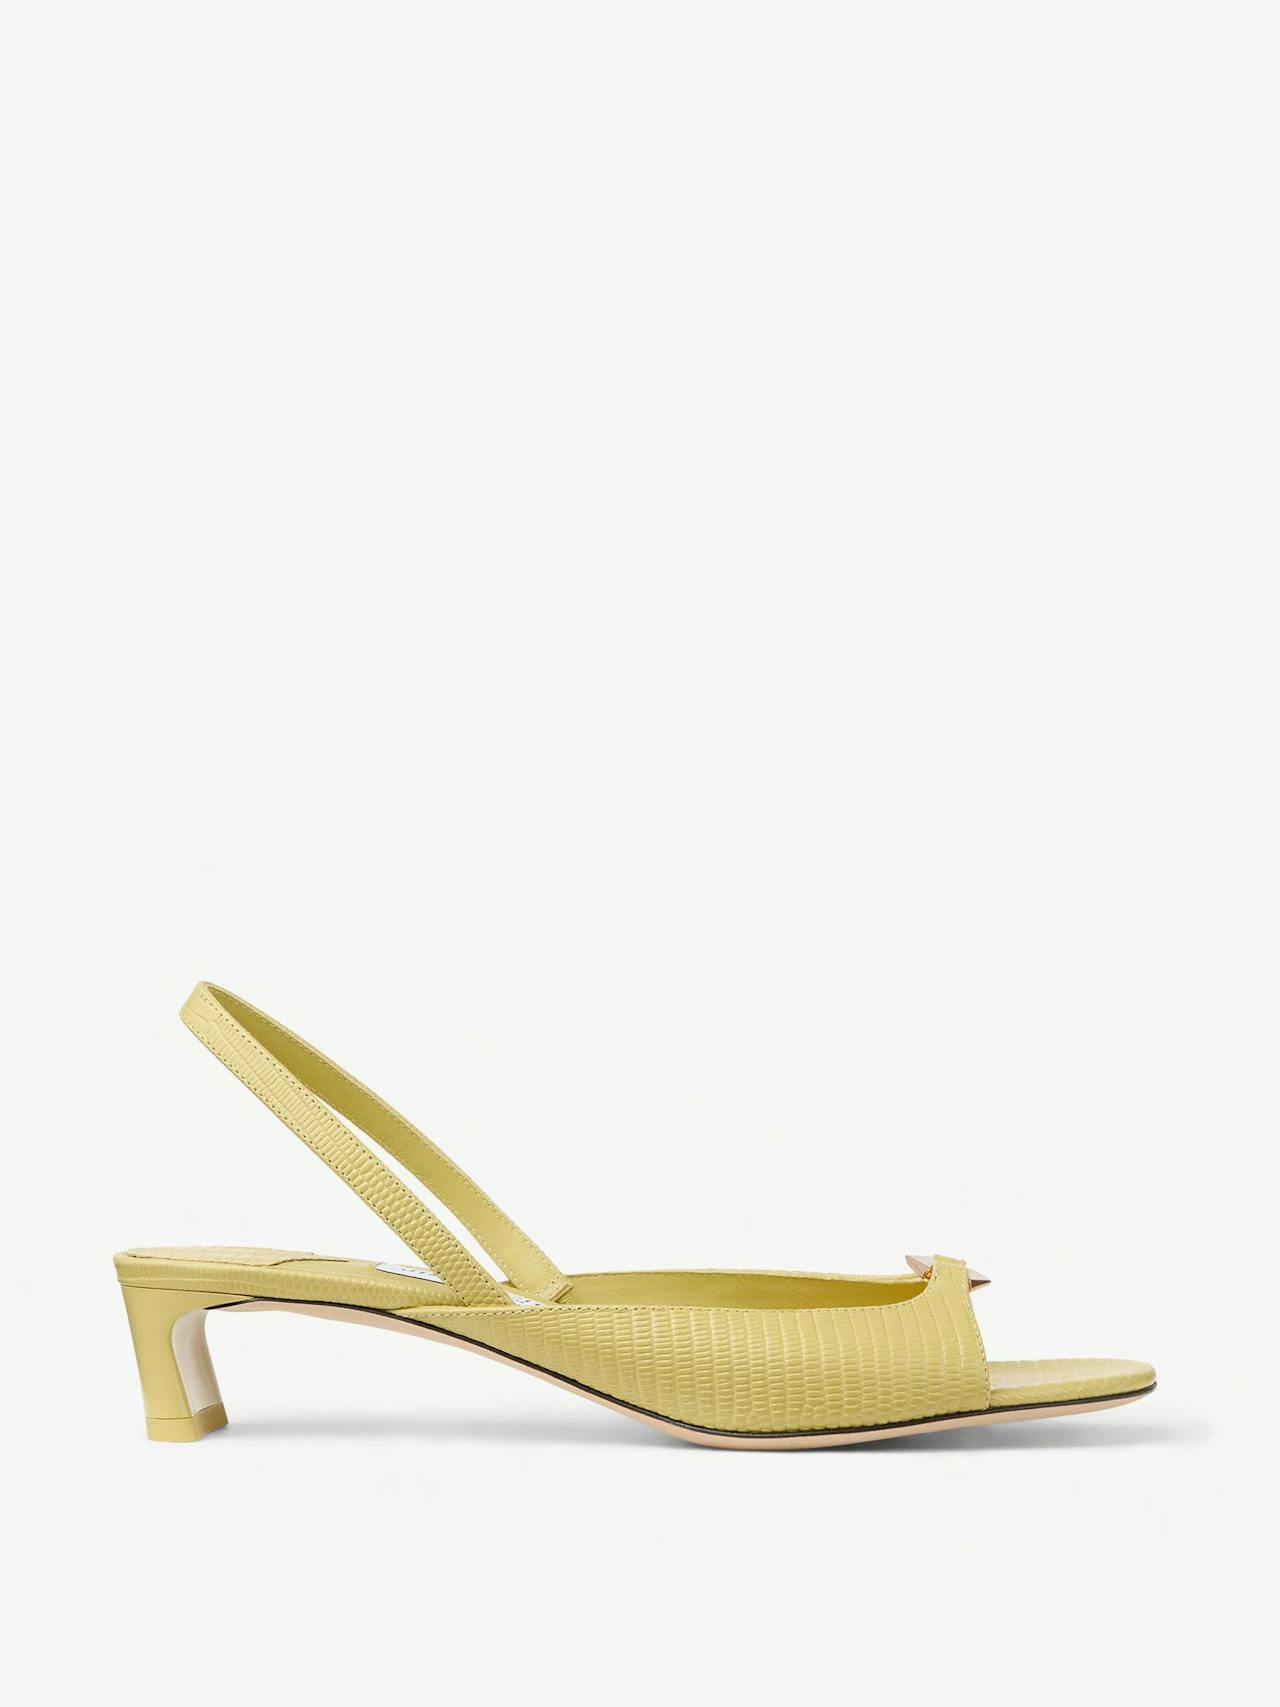 Yellow lizard print leather sandals